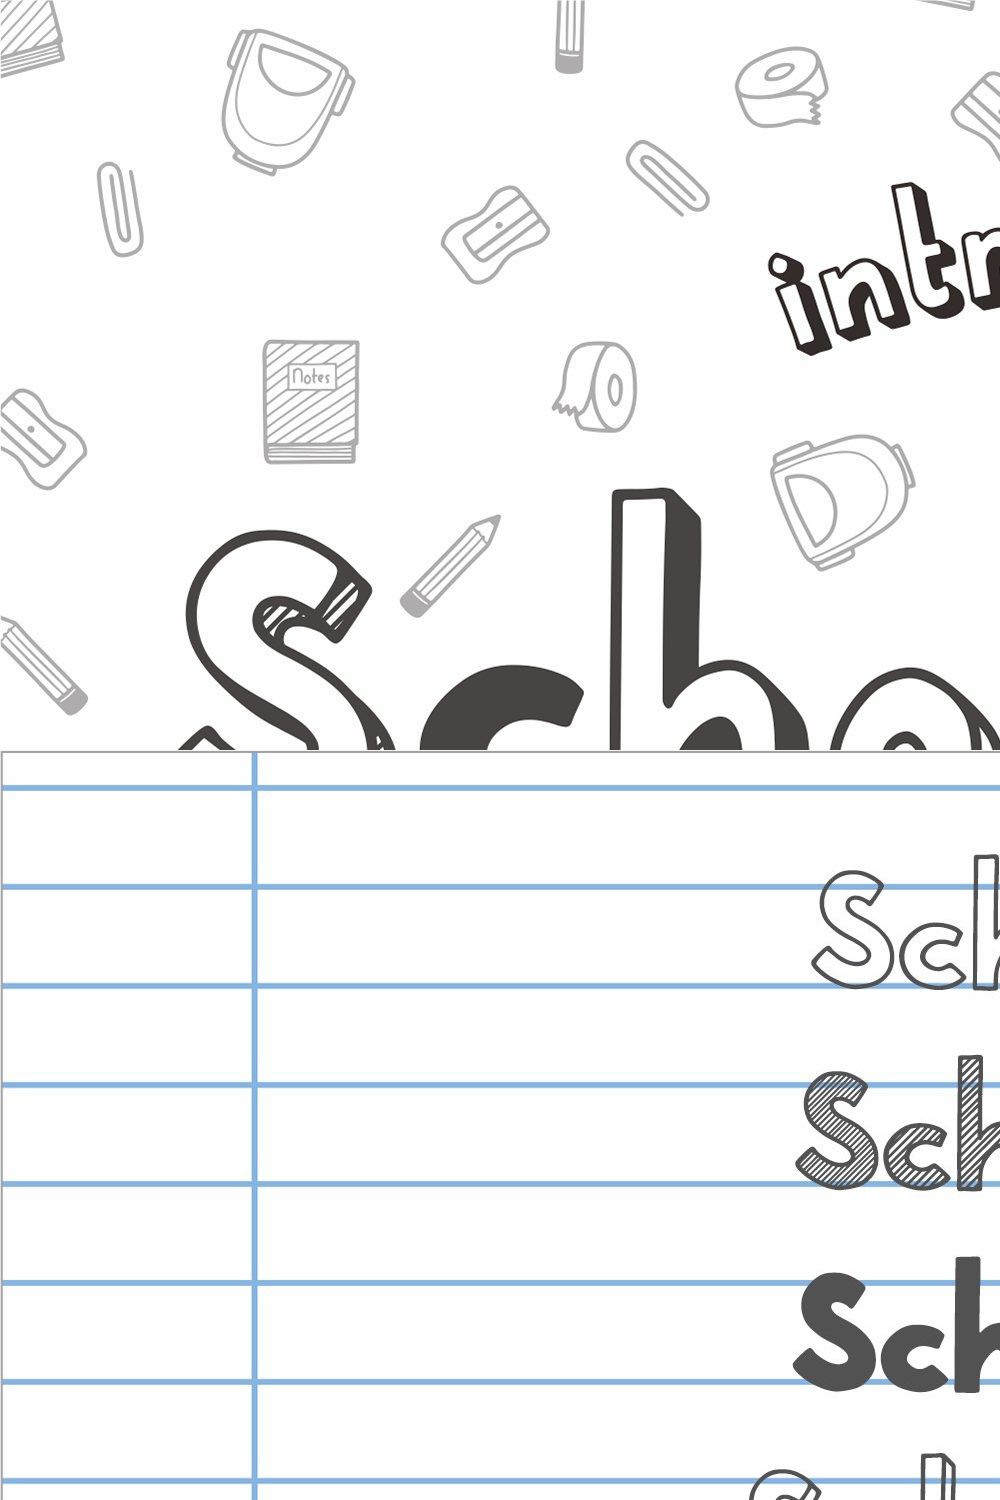 School Holic | 7 Font Styles + Bonus pinterest preview image.